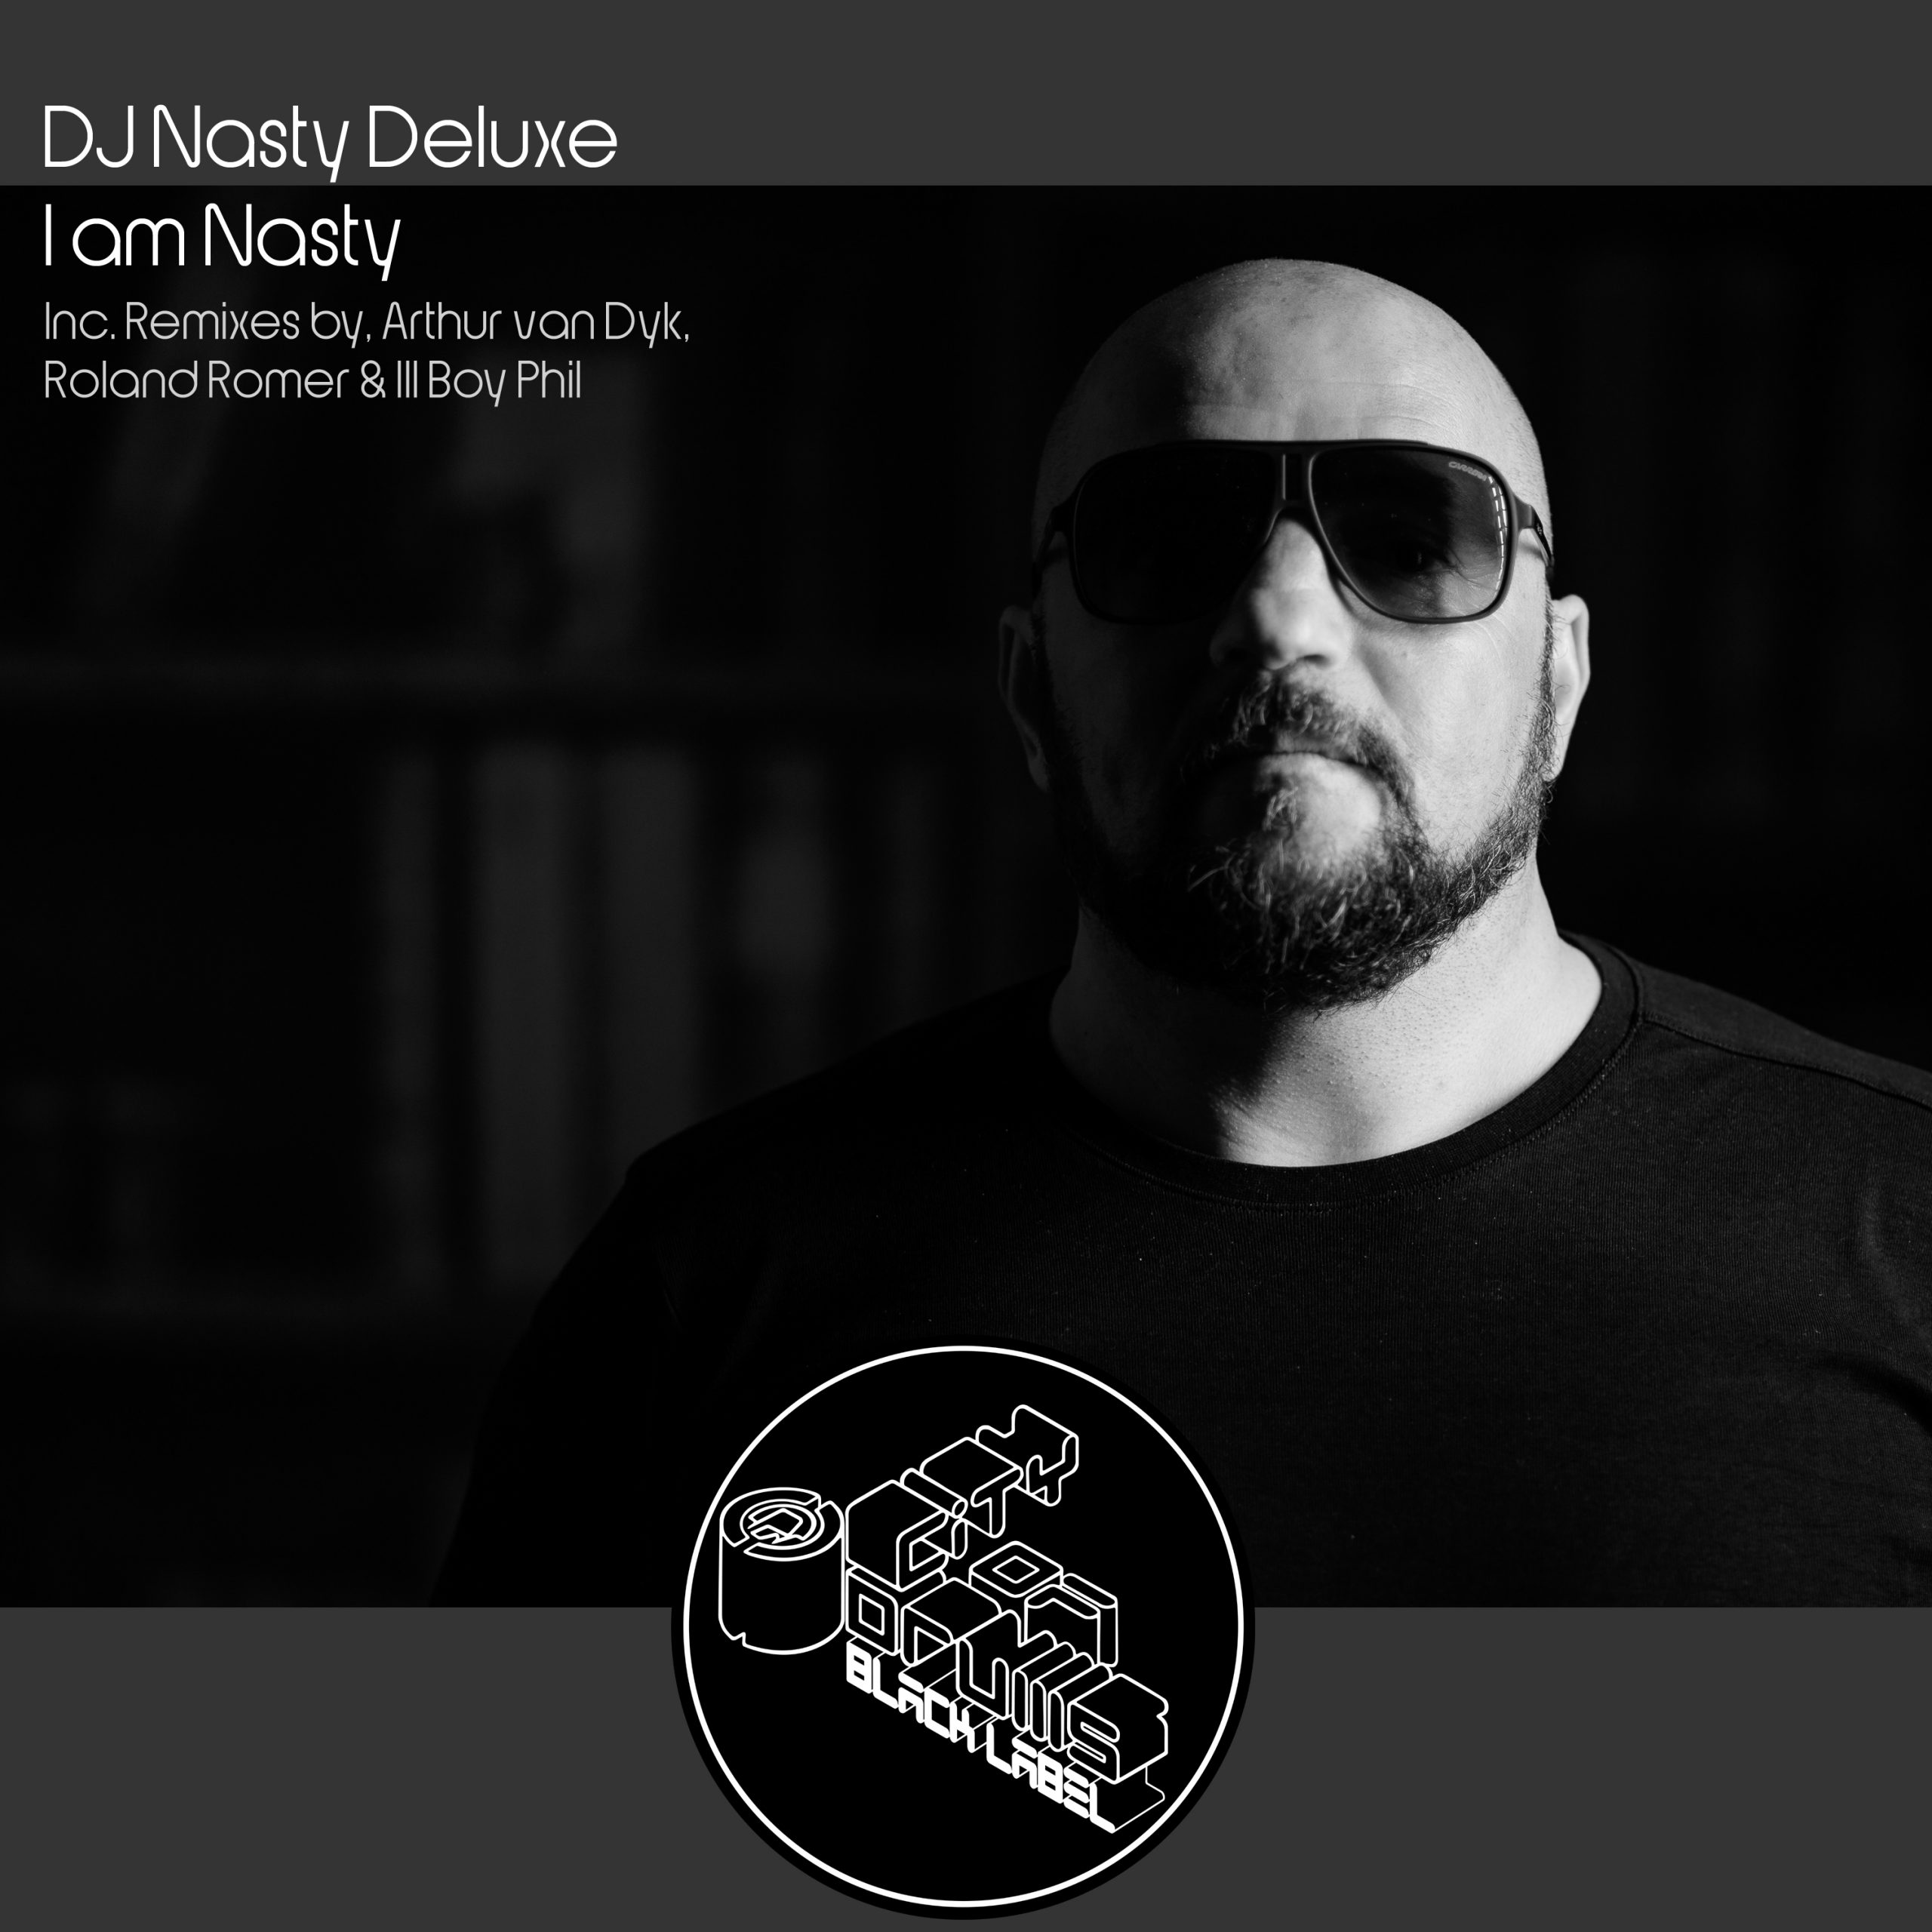 OUT NOW!!! I am Nasty von DJ Nasty Deluxe! 13